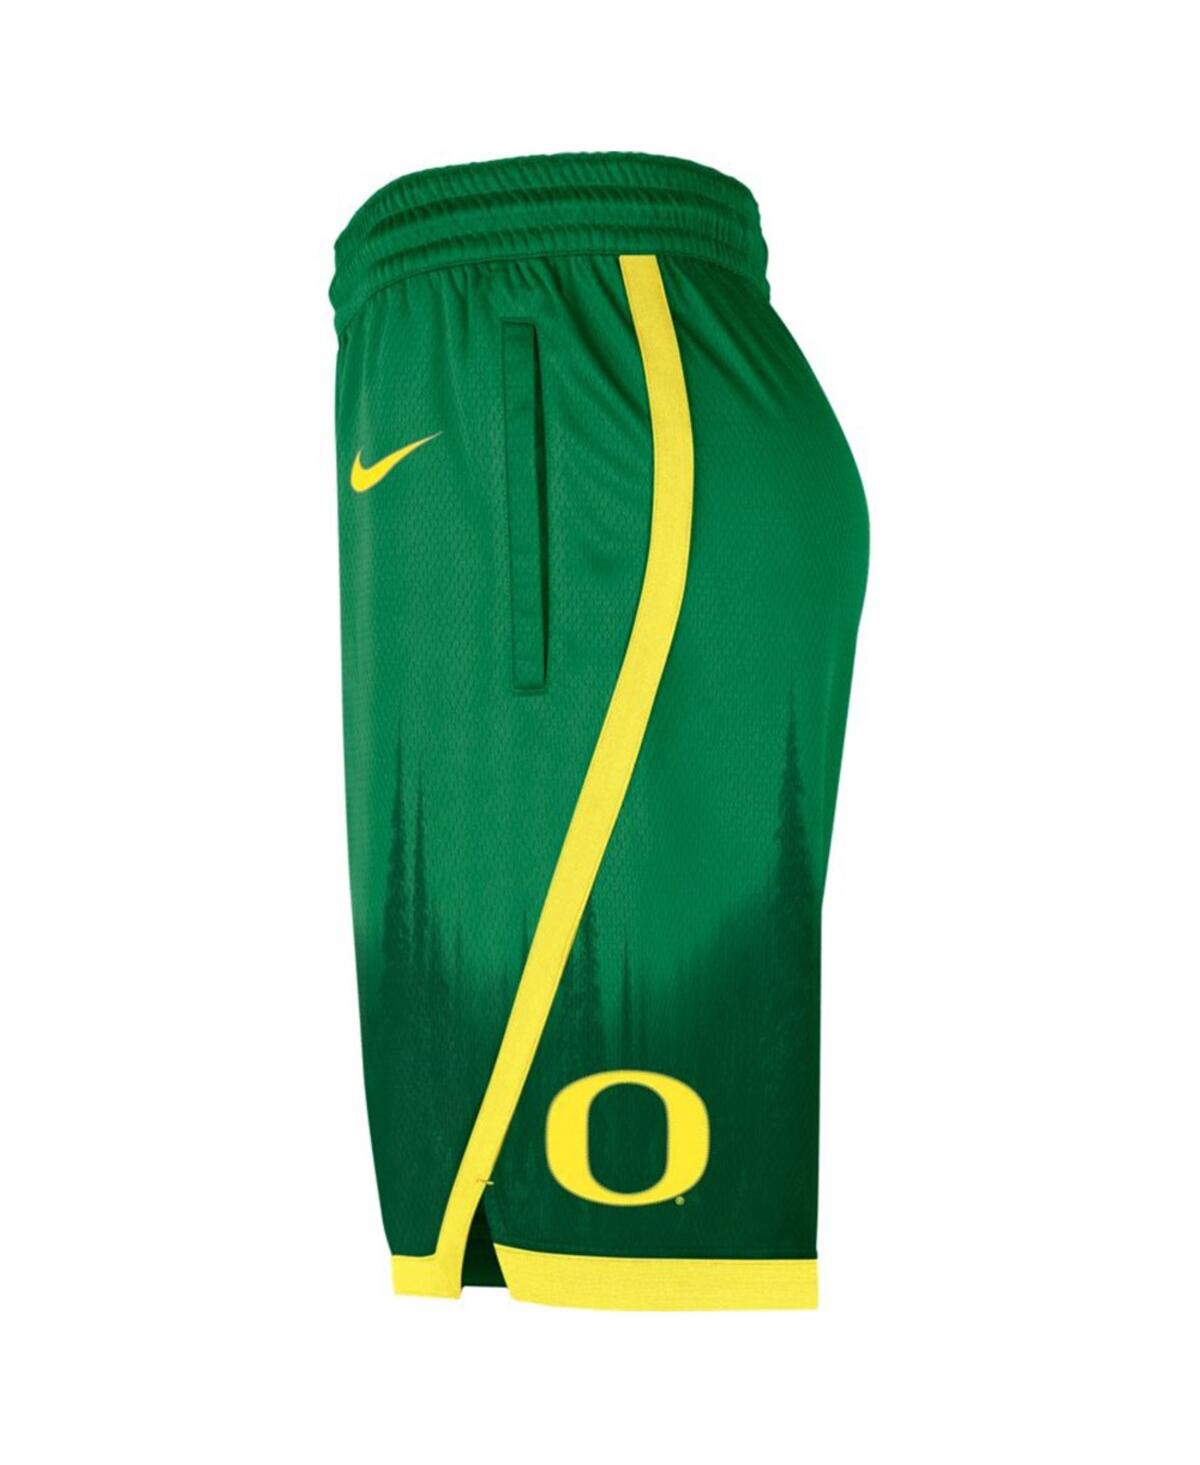 Shop Nike Men's  Green Oregon Ducks Team Limited Basketball Shorts